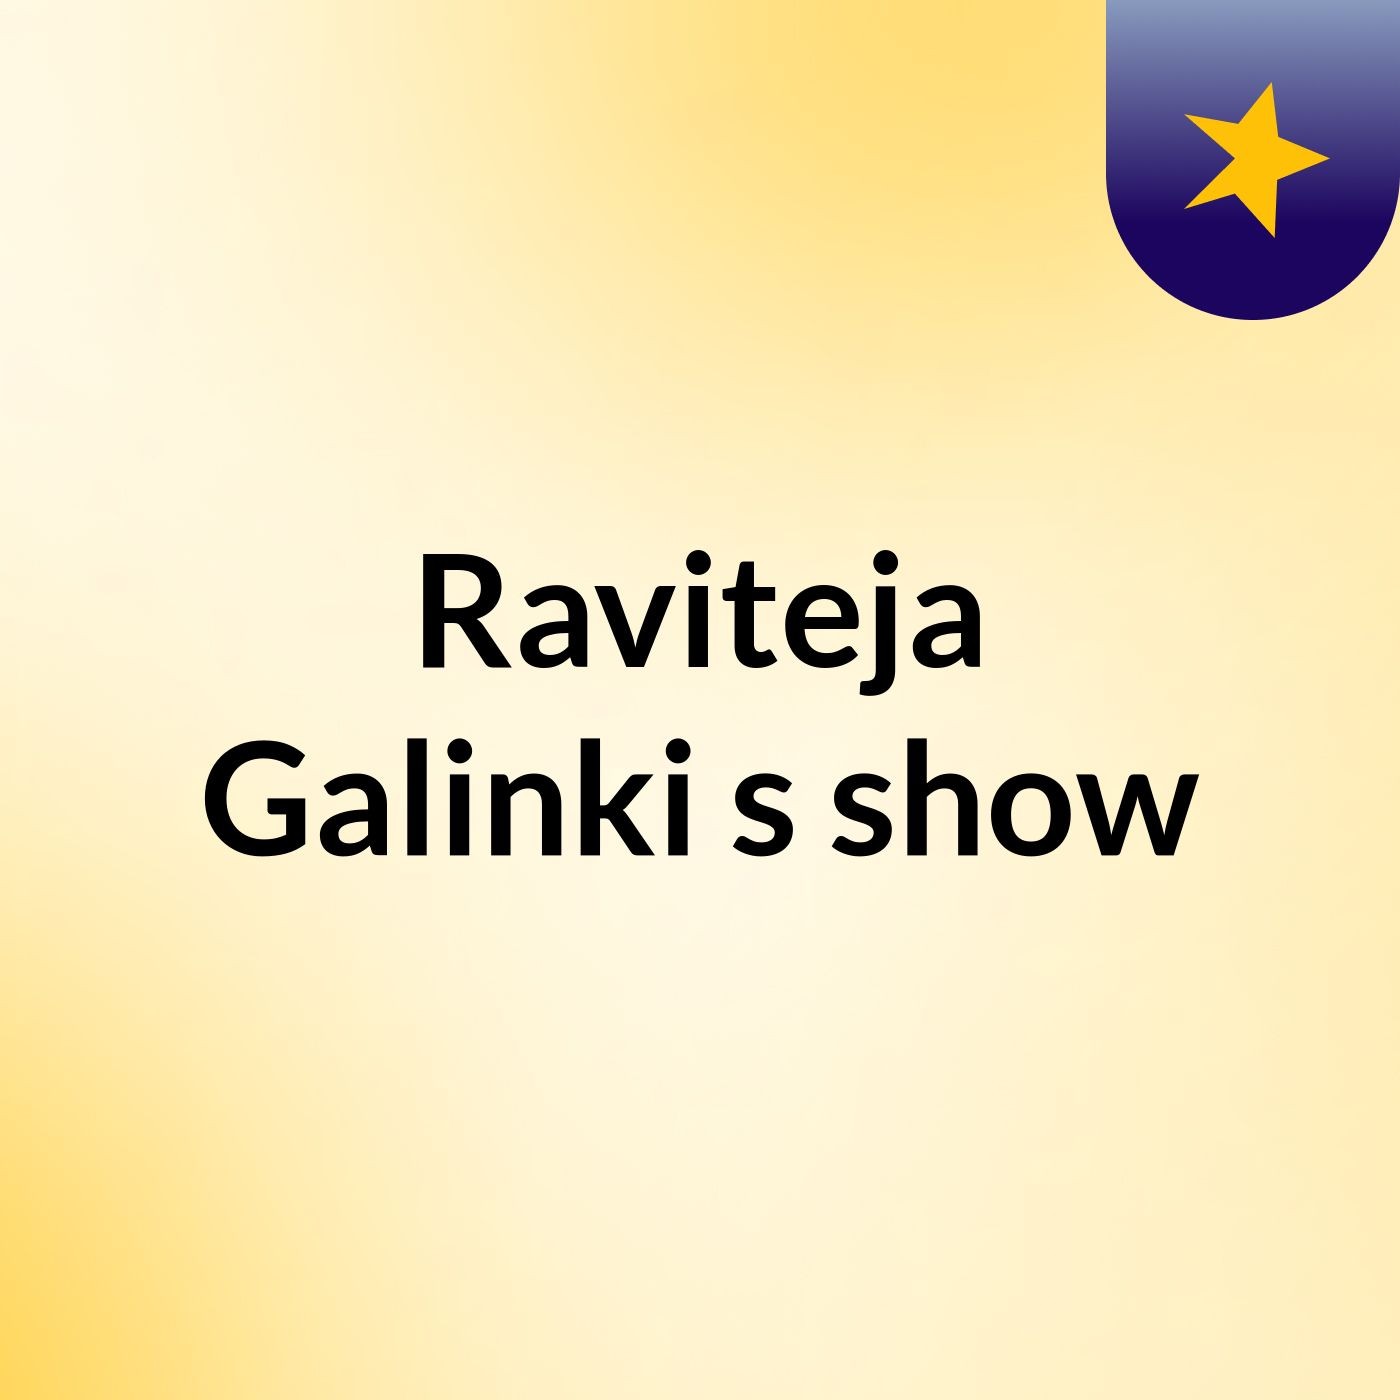 Raviteja Galinki's show